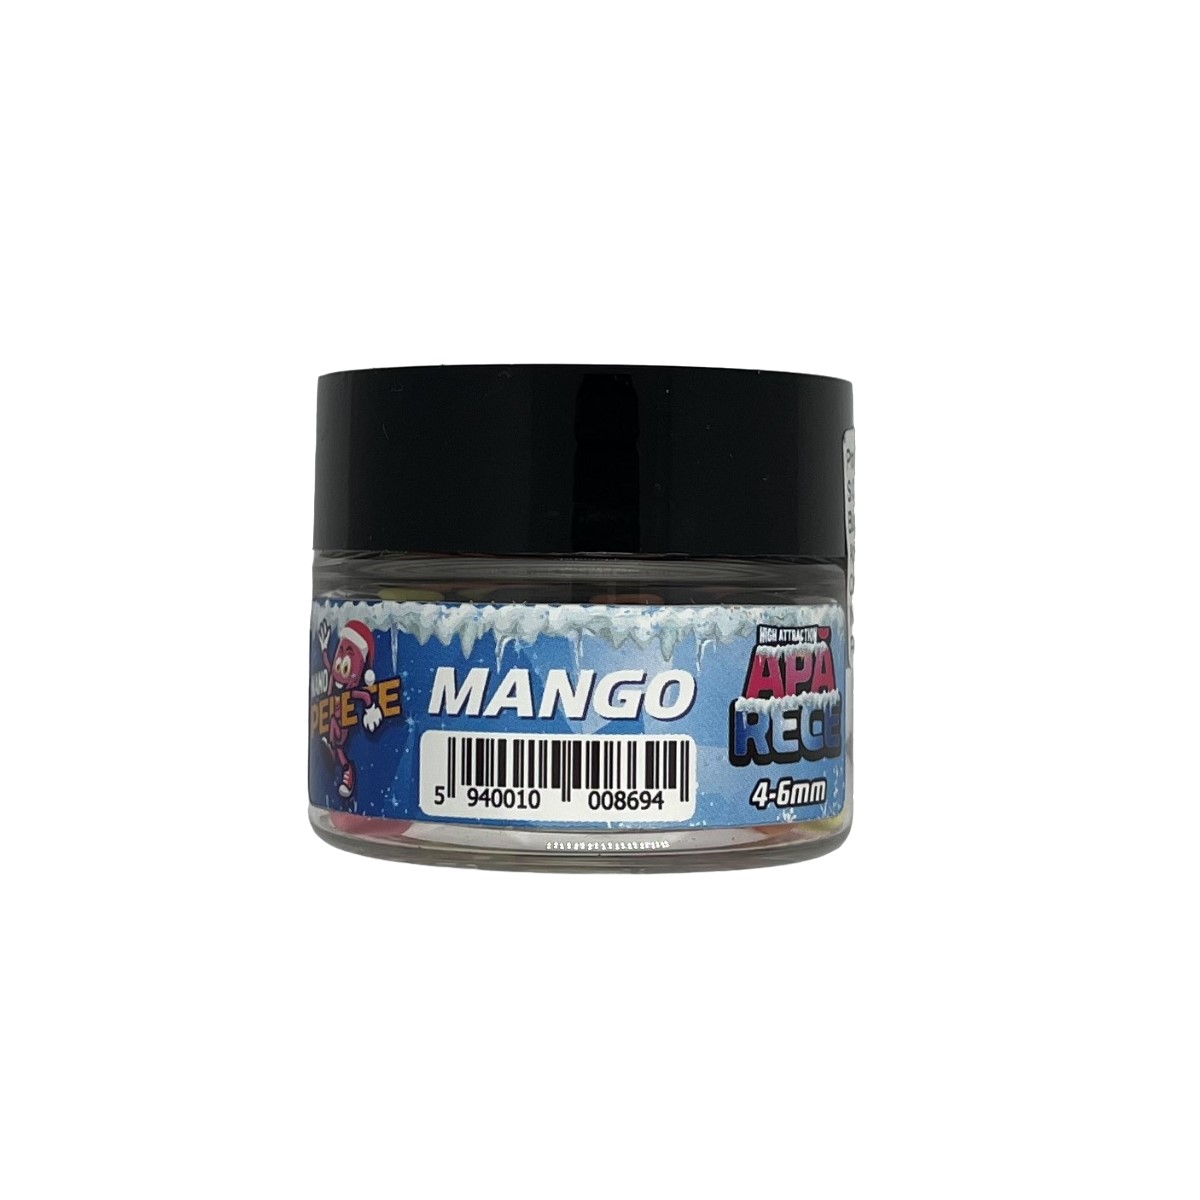 CPK APA RECE Nano Pop-Up Mango 4-6mm плуващи дъмбели